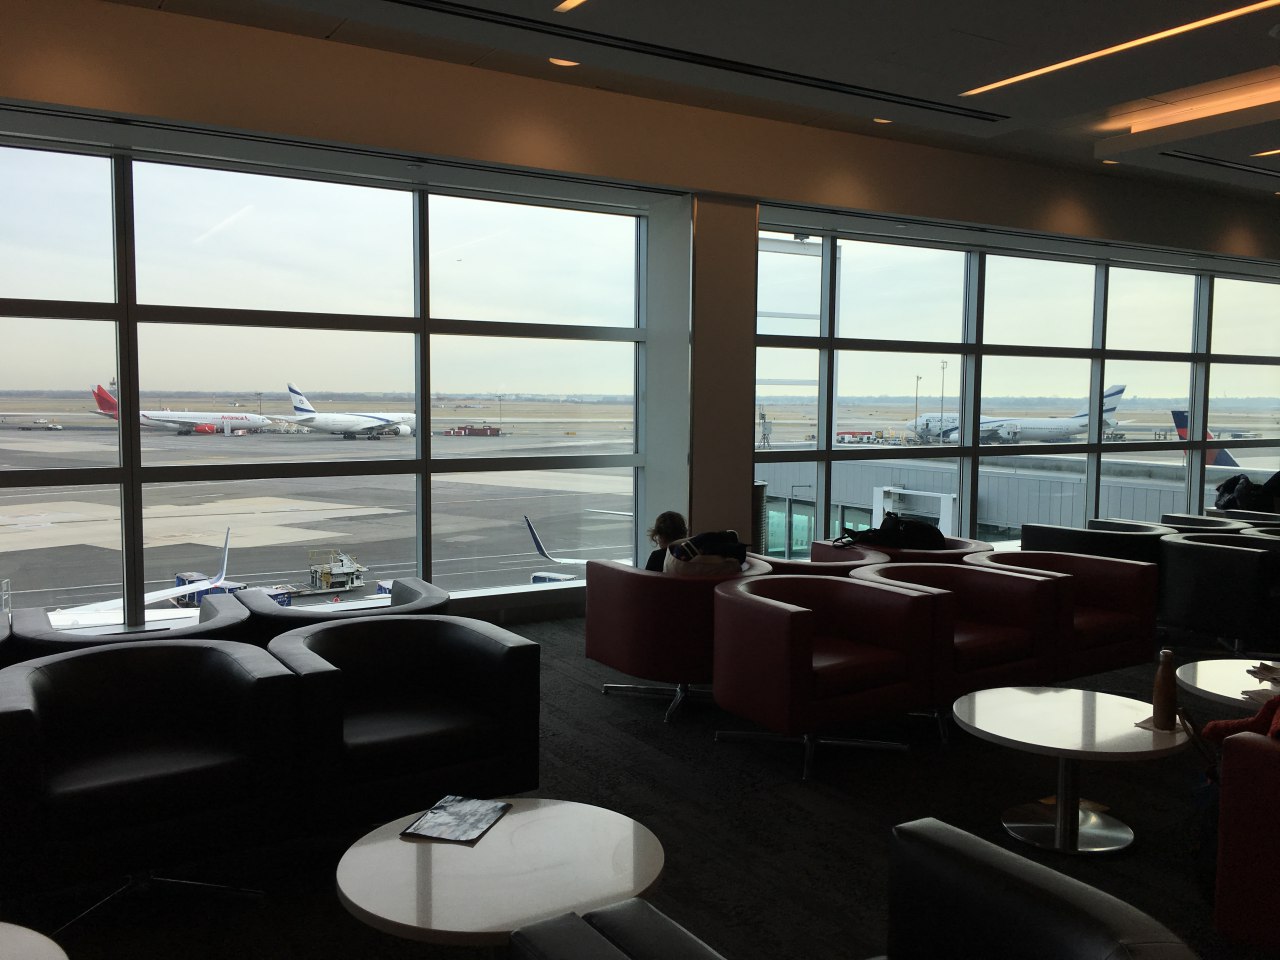 Review-Delta Sky Club JFK Terminal 4-Seating-View of Tarmac